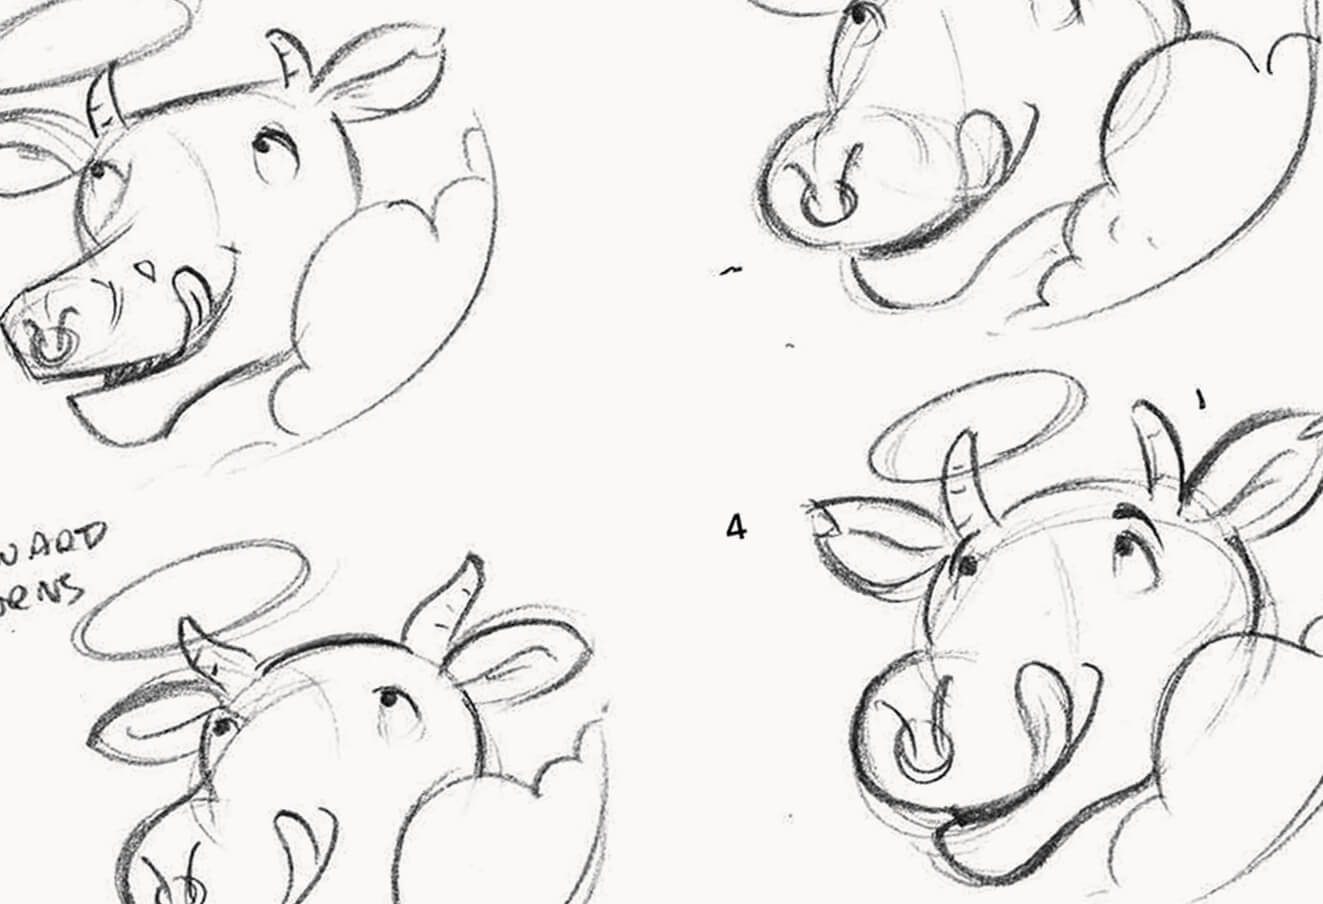 Halo Burger Cow Mascot Illustration Concept Progress